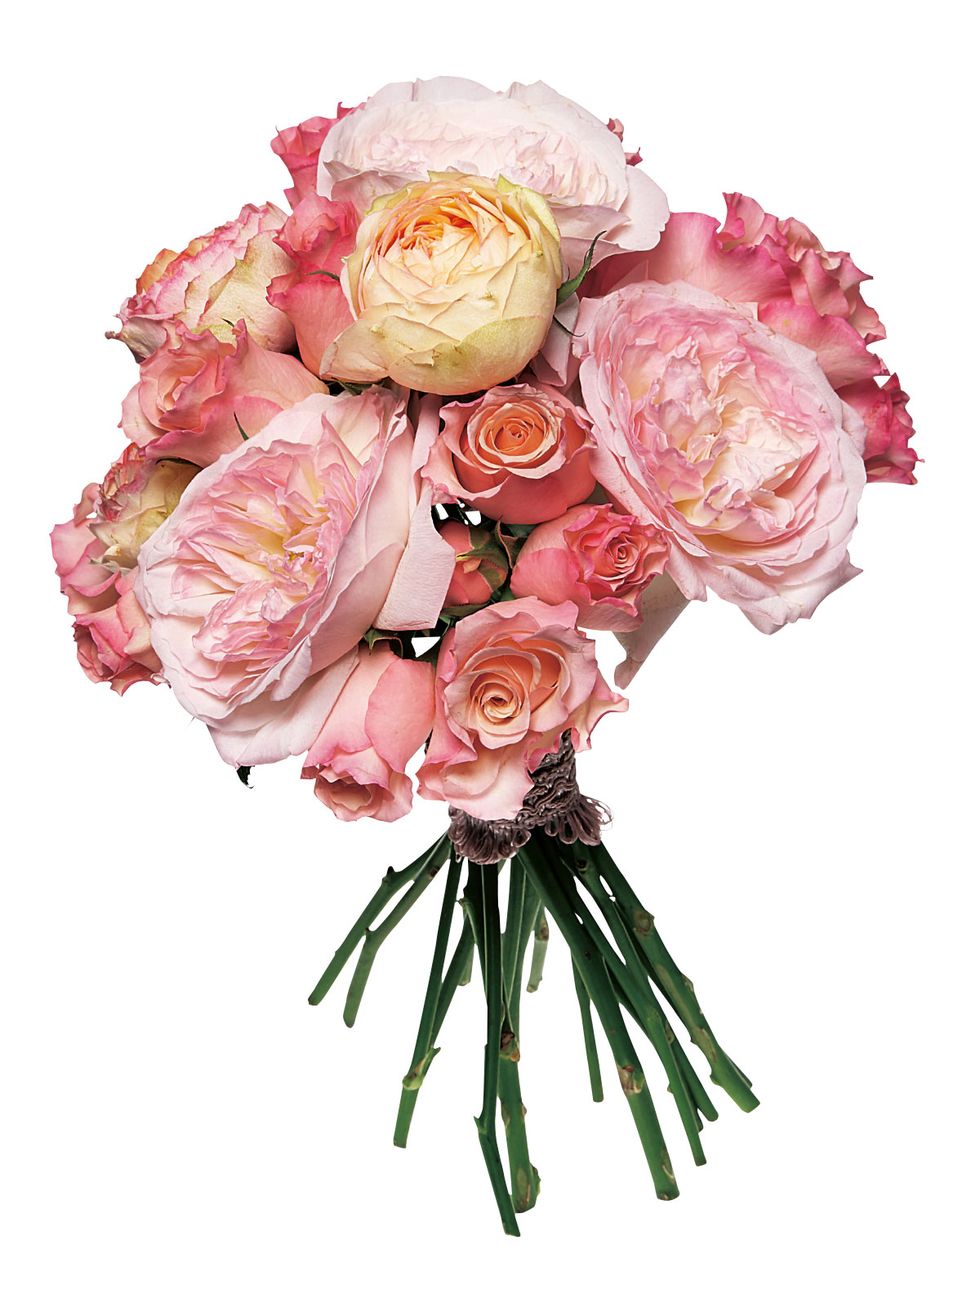 Petal, Flower, Bouquet, Pink, Cut flowers, Flowering plant, Flower Arranging, Peach, Garden roses, Rose family, 